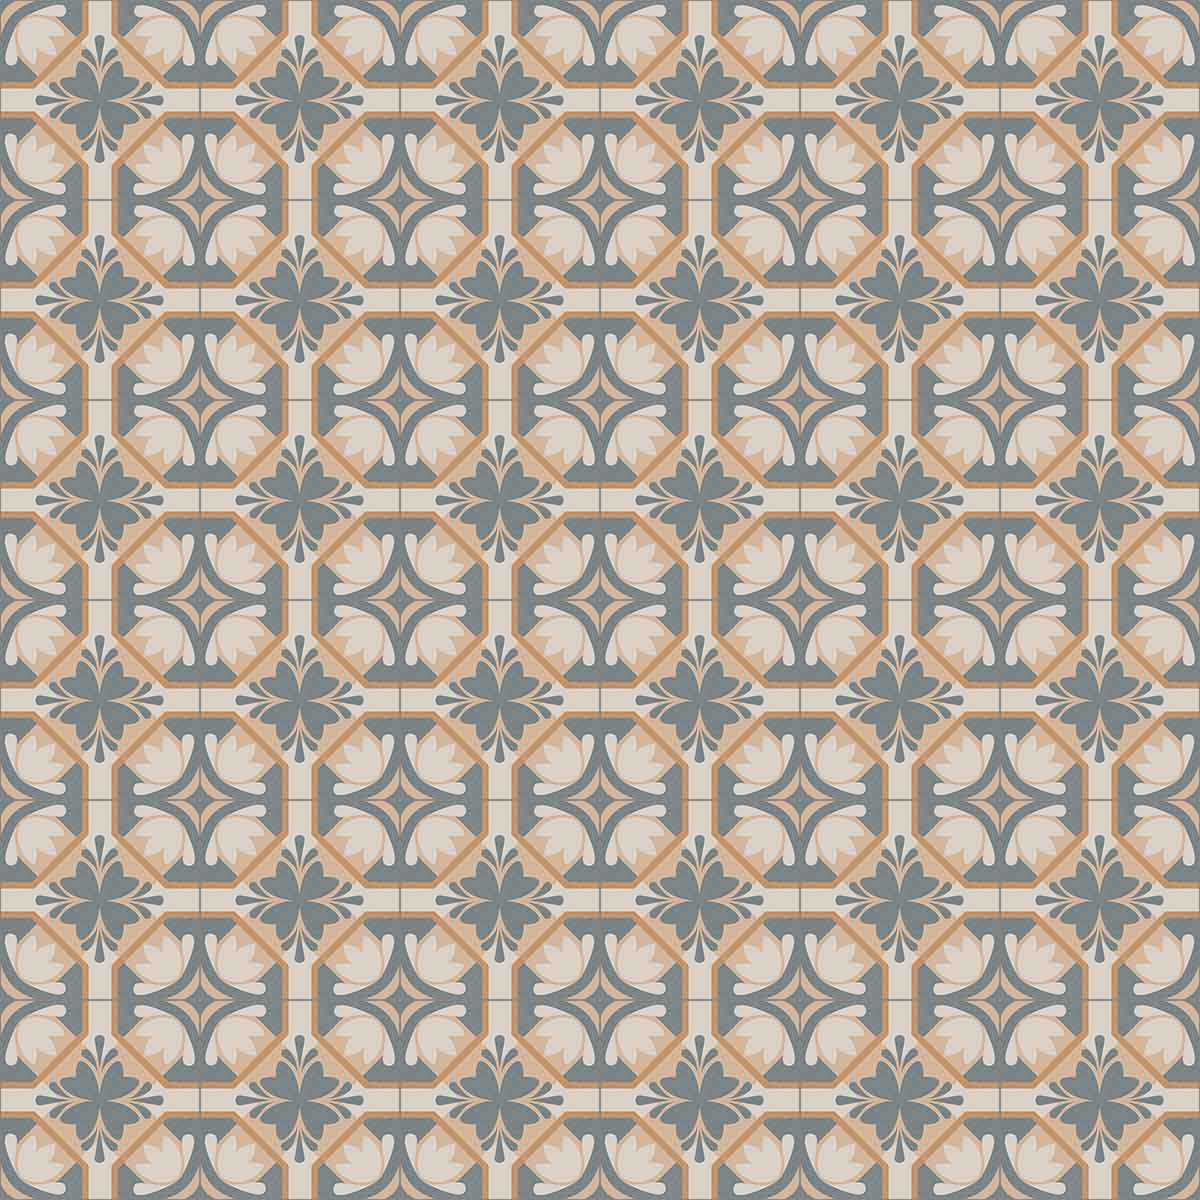 vives bali jimbaran pattern porcelain tile matt 20x20cm